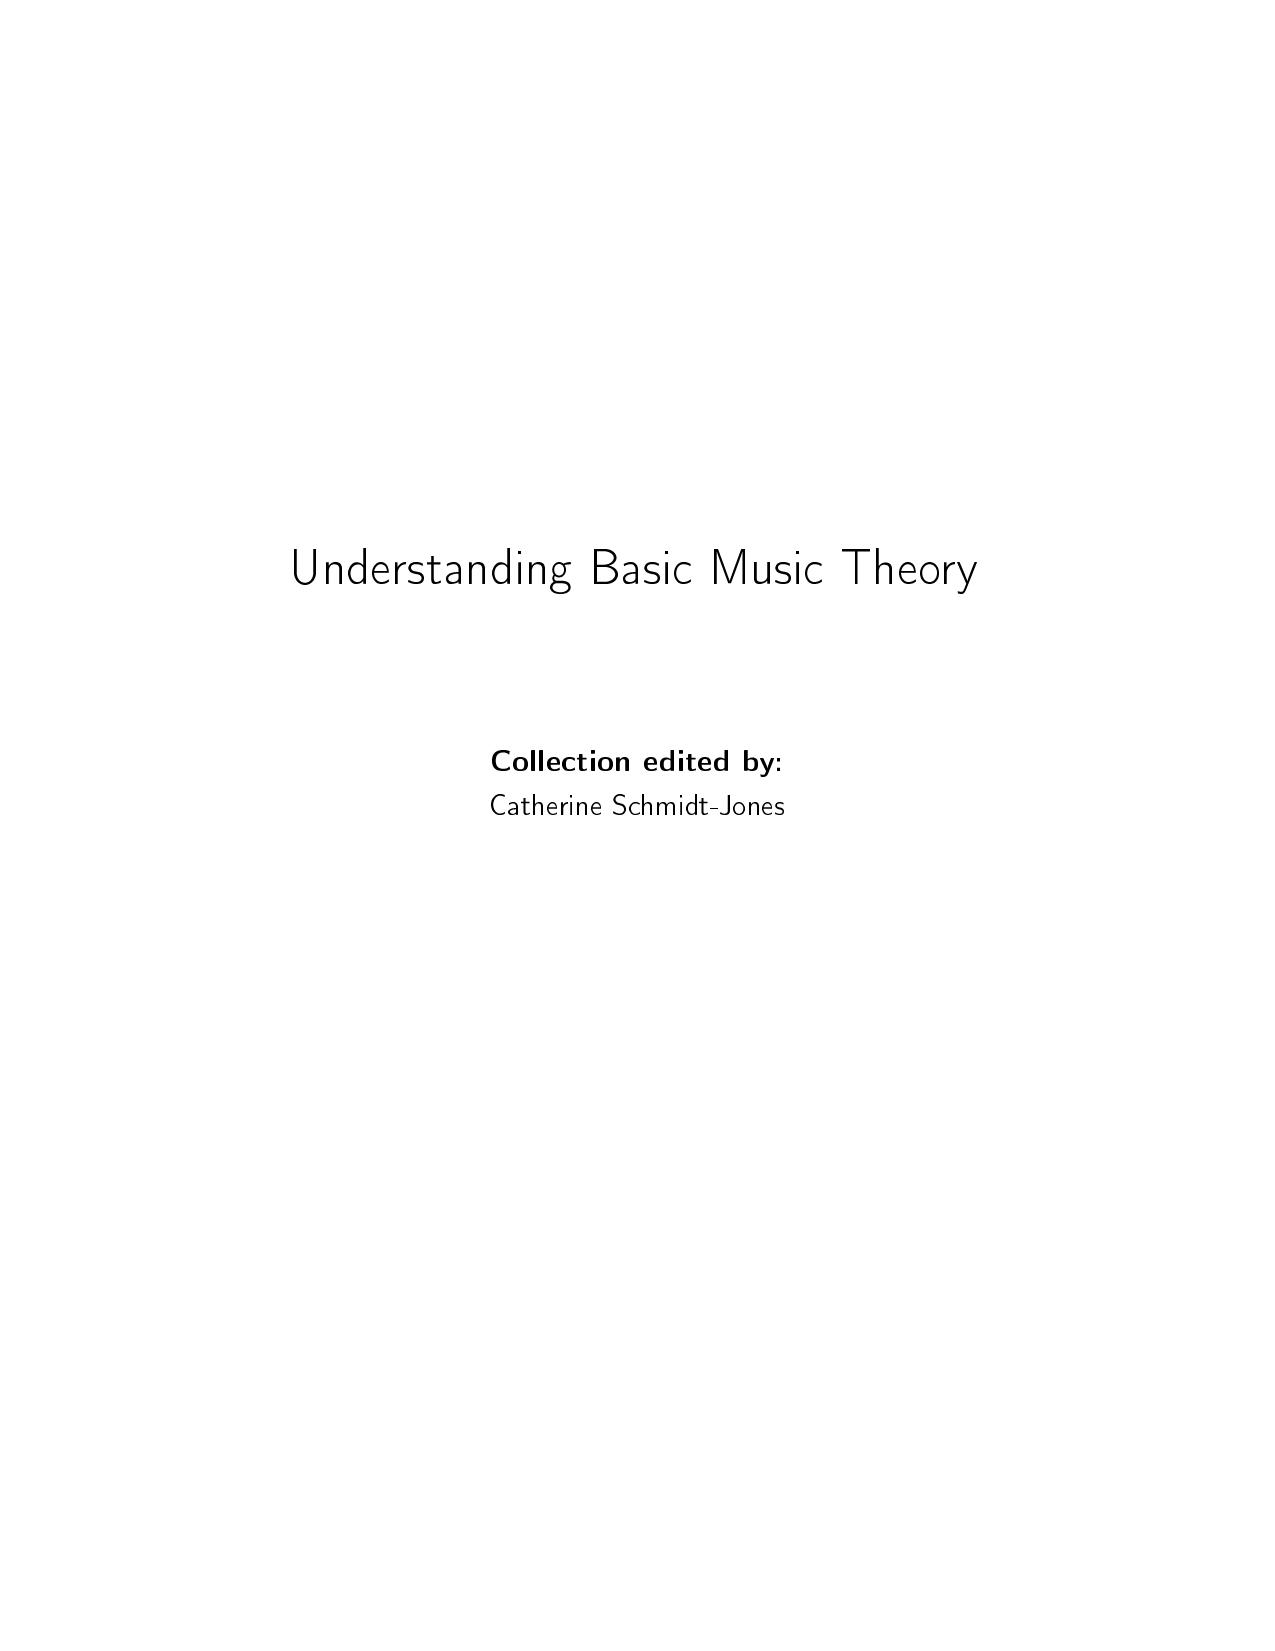 Understanding basic music theory 2007